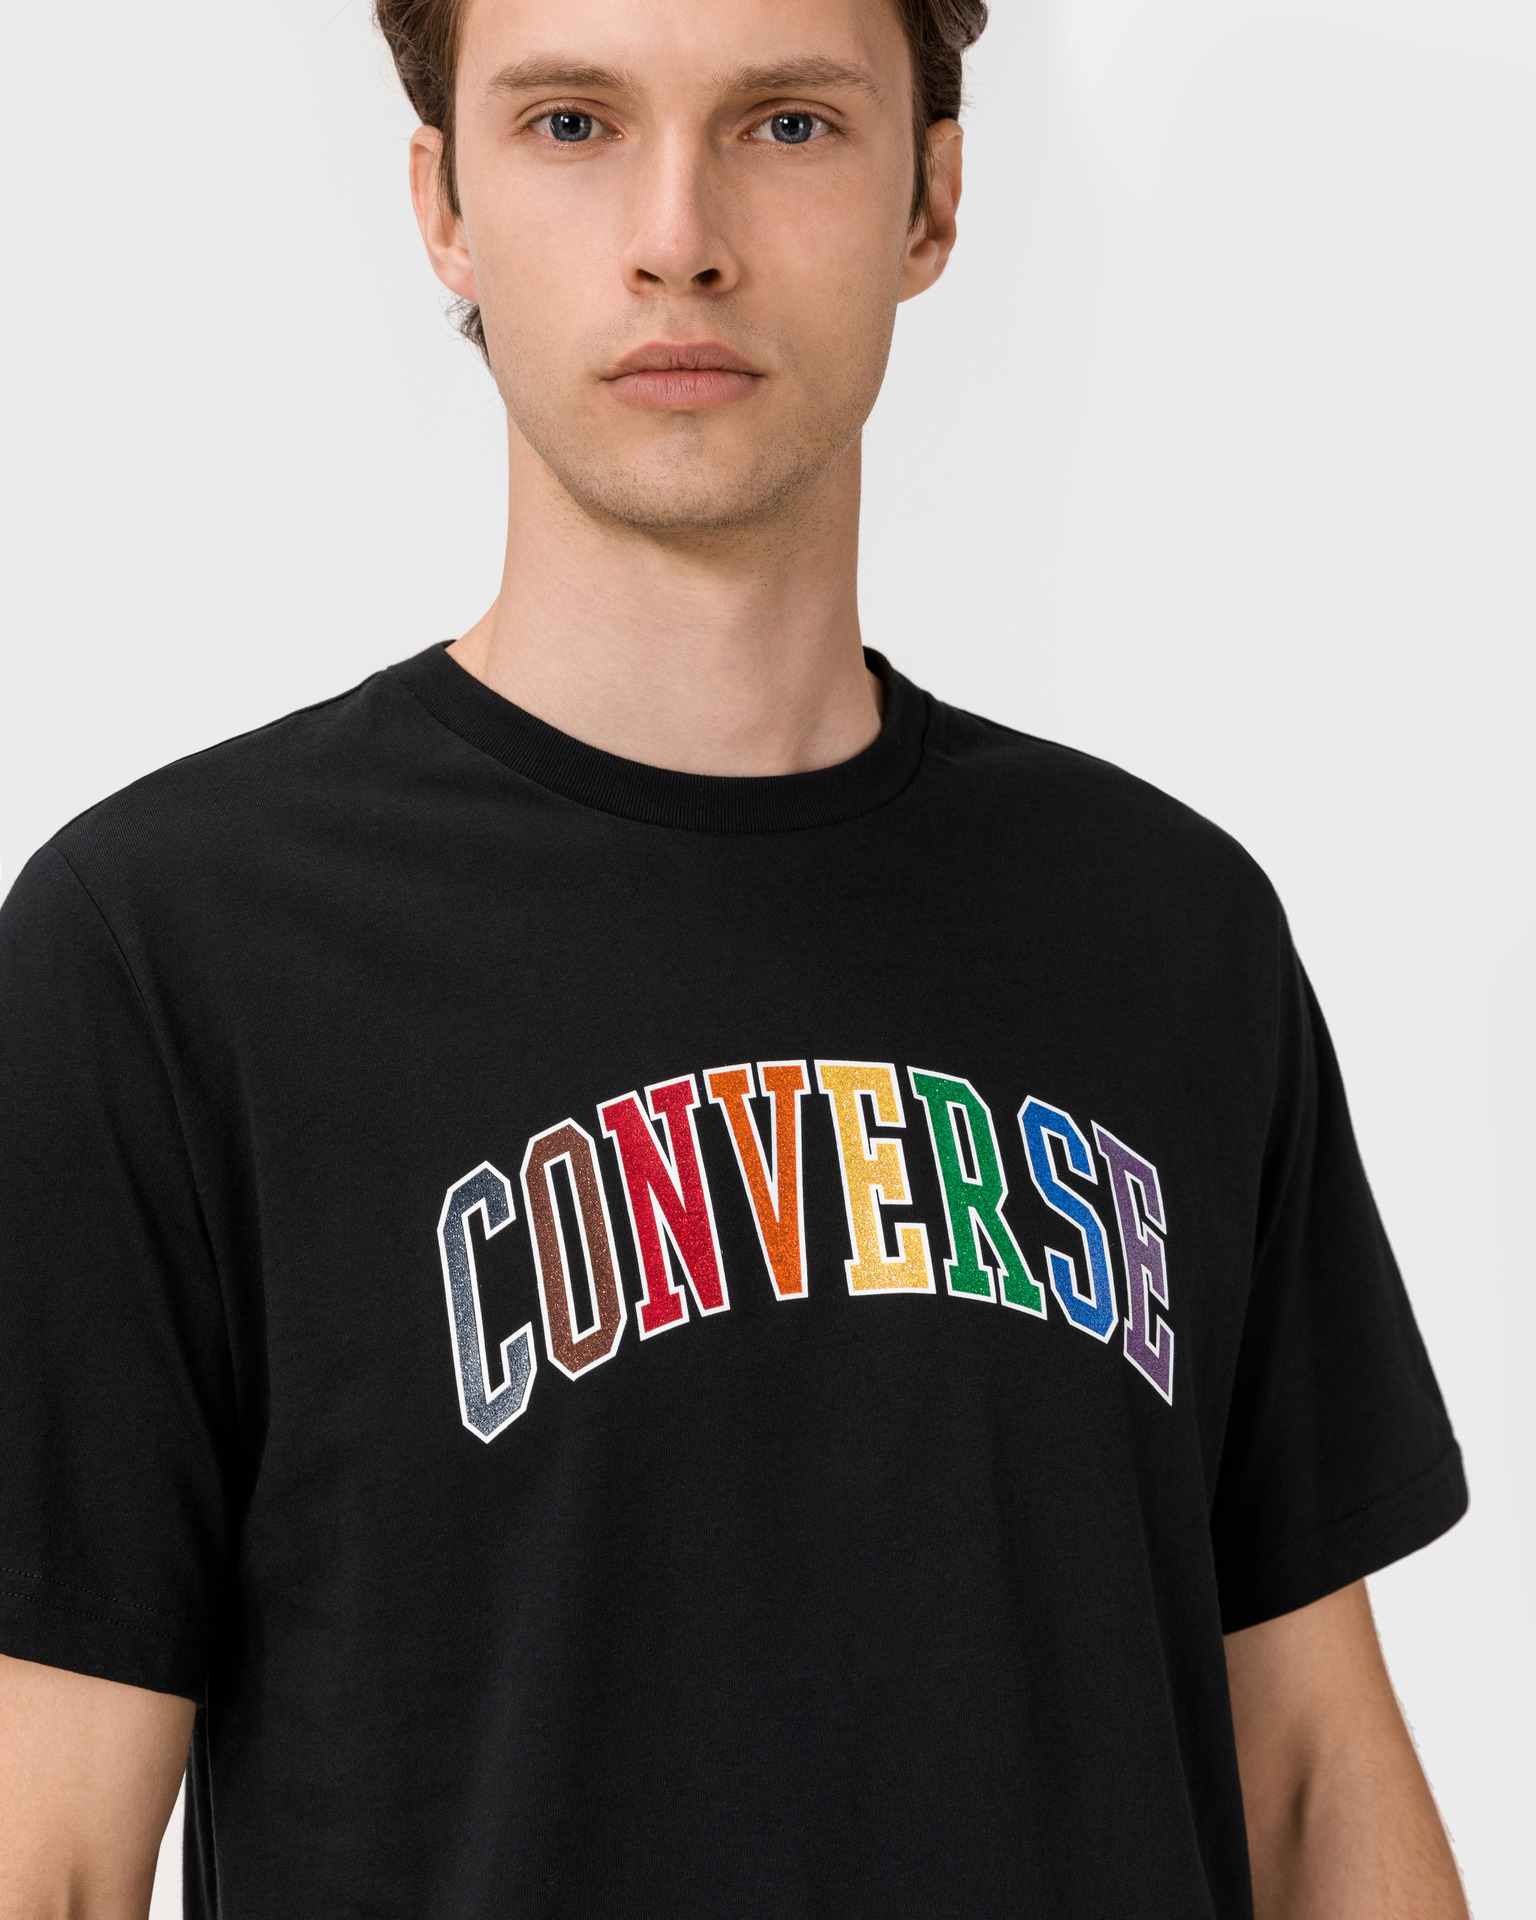 converse pride t shirt off 67% - online 